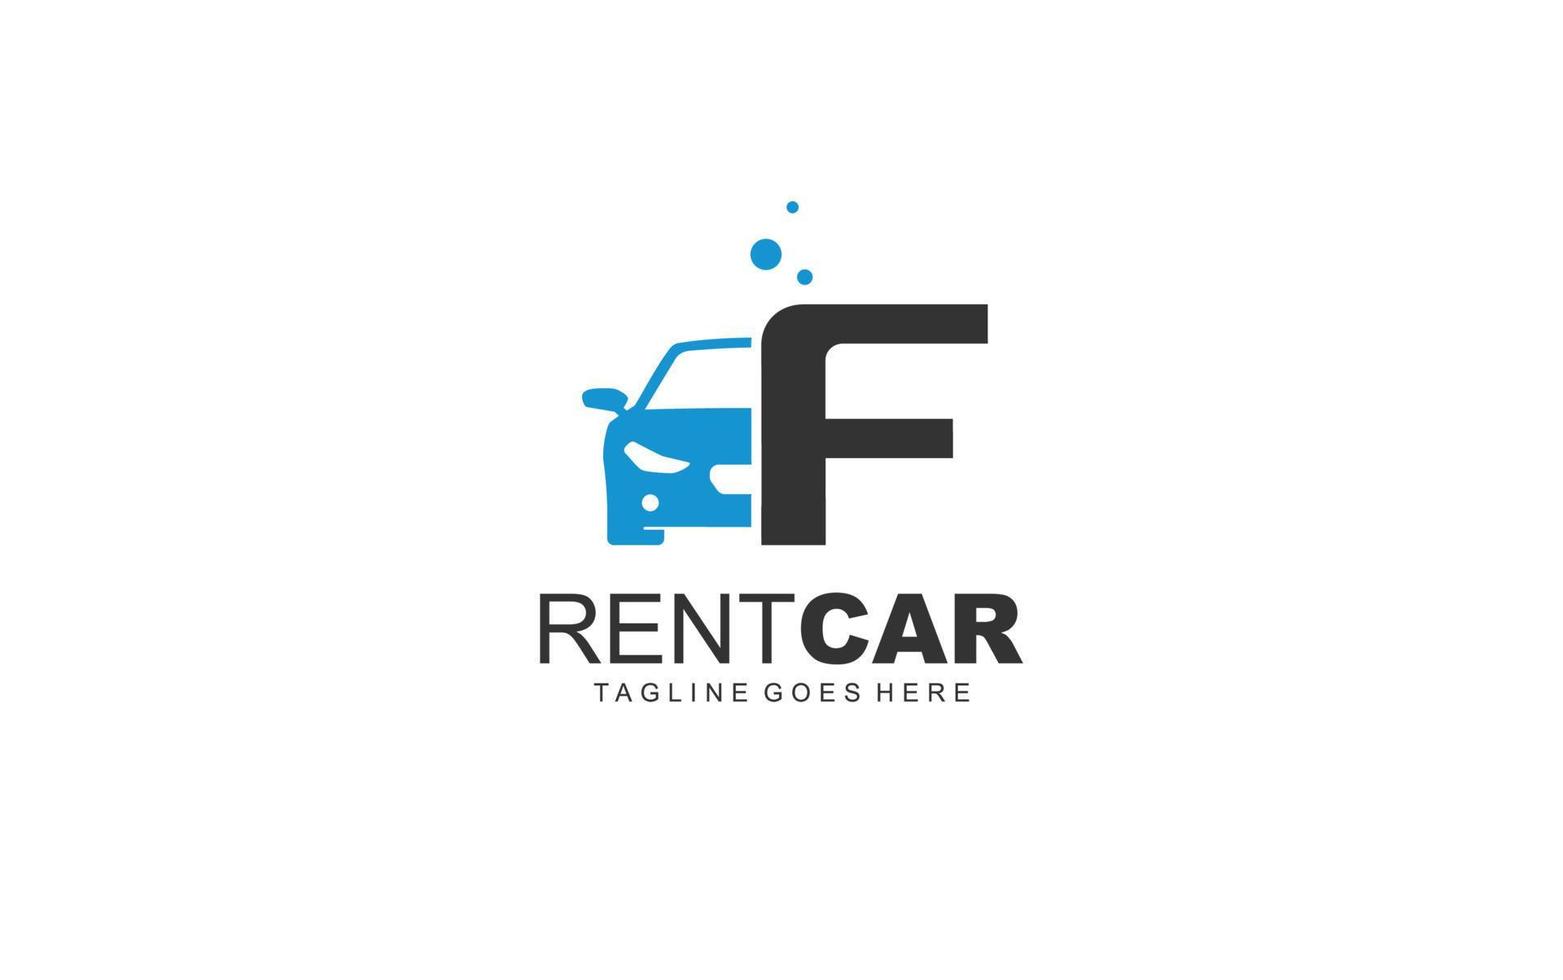 F logo rental for branding company. transportation template vector illustration for your brand.